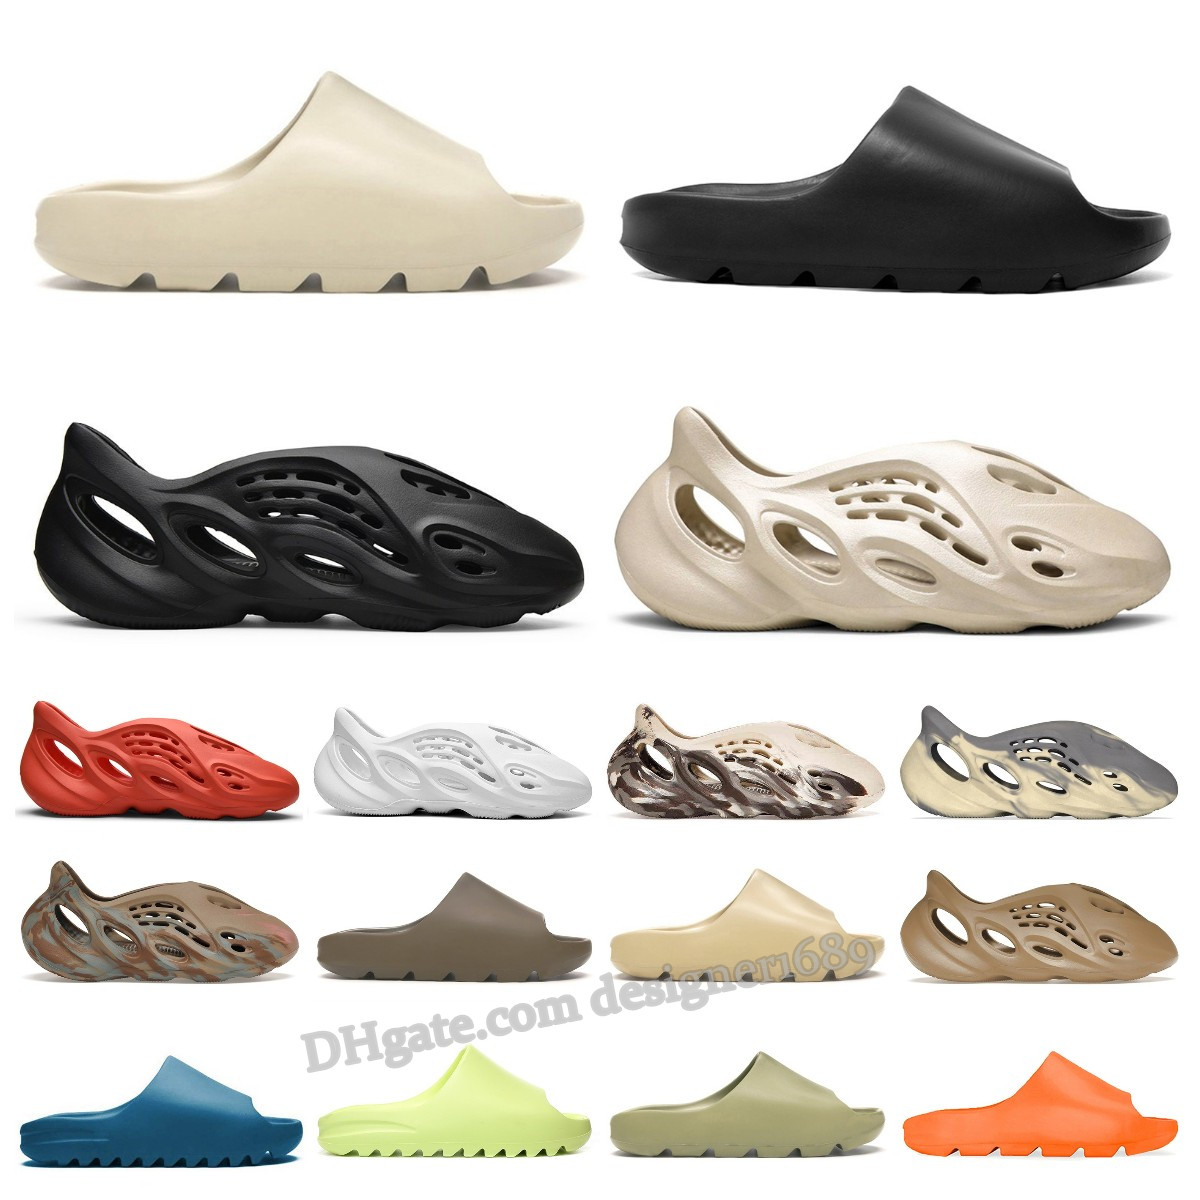 

Fashion slides slippers shoes designer sandals women men beach casual shoes Bone Ararat Ochre Moon Gray Cream Clay mens Foams Runner trainers outdoor sneakers, Box